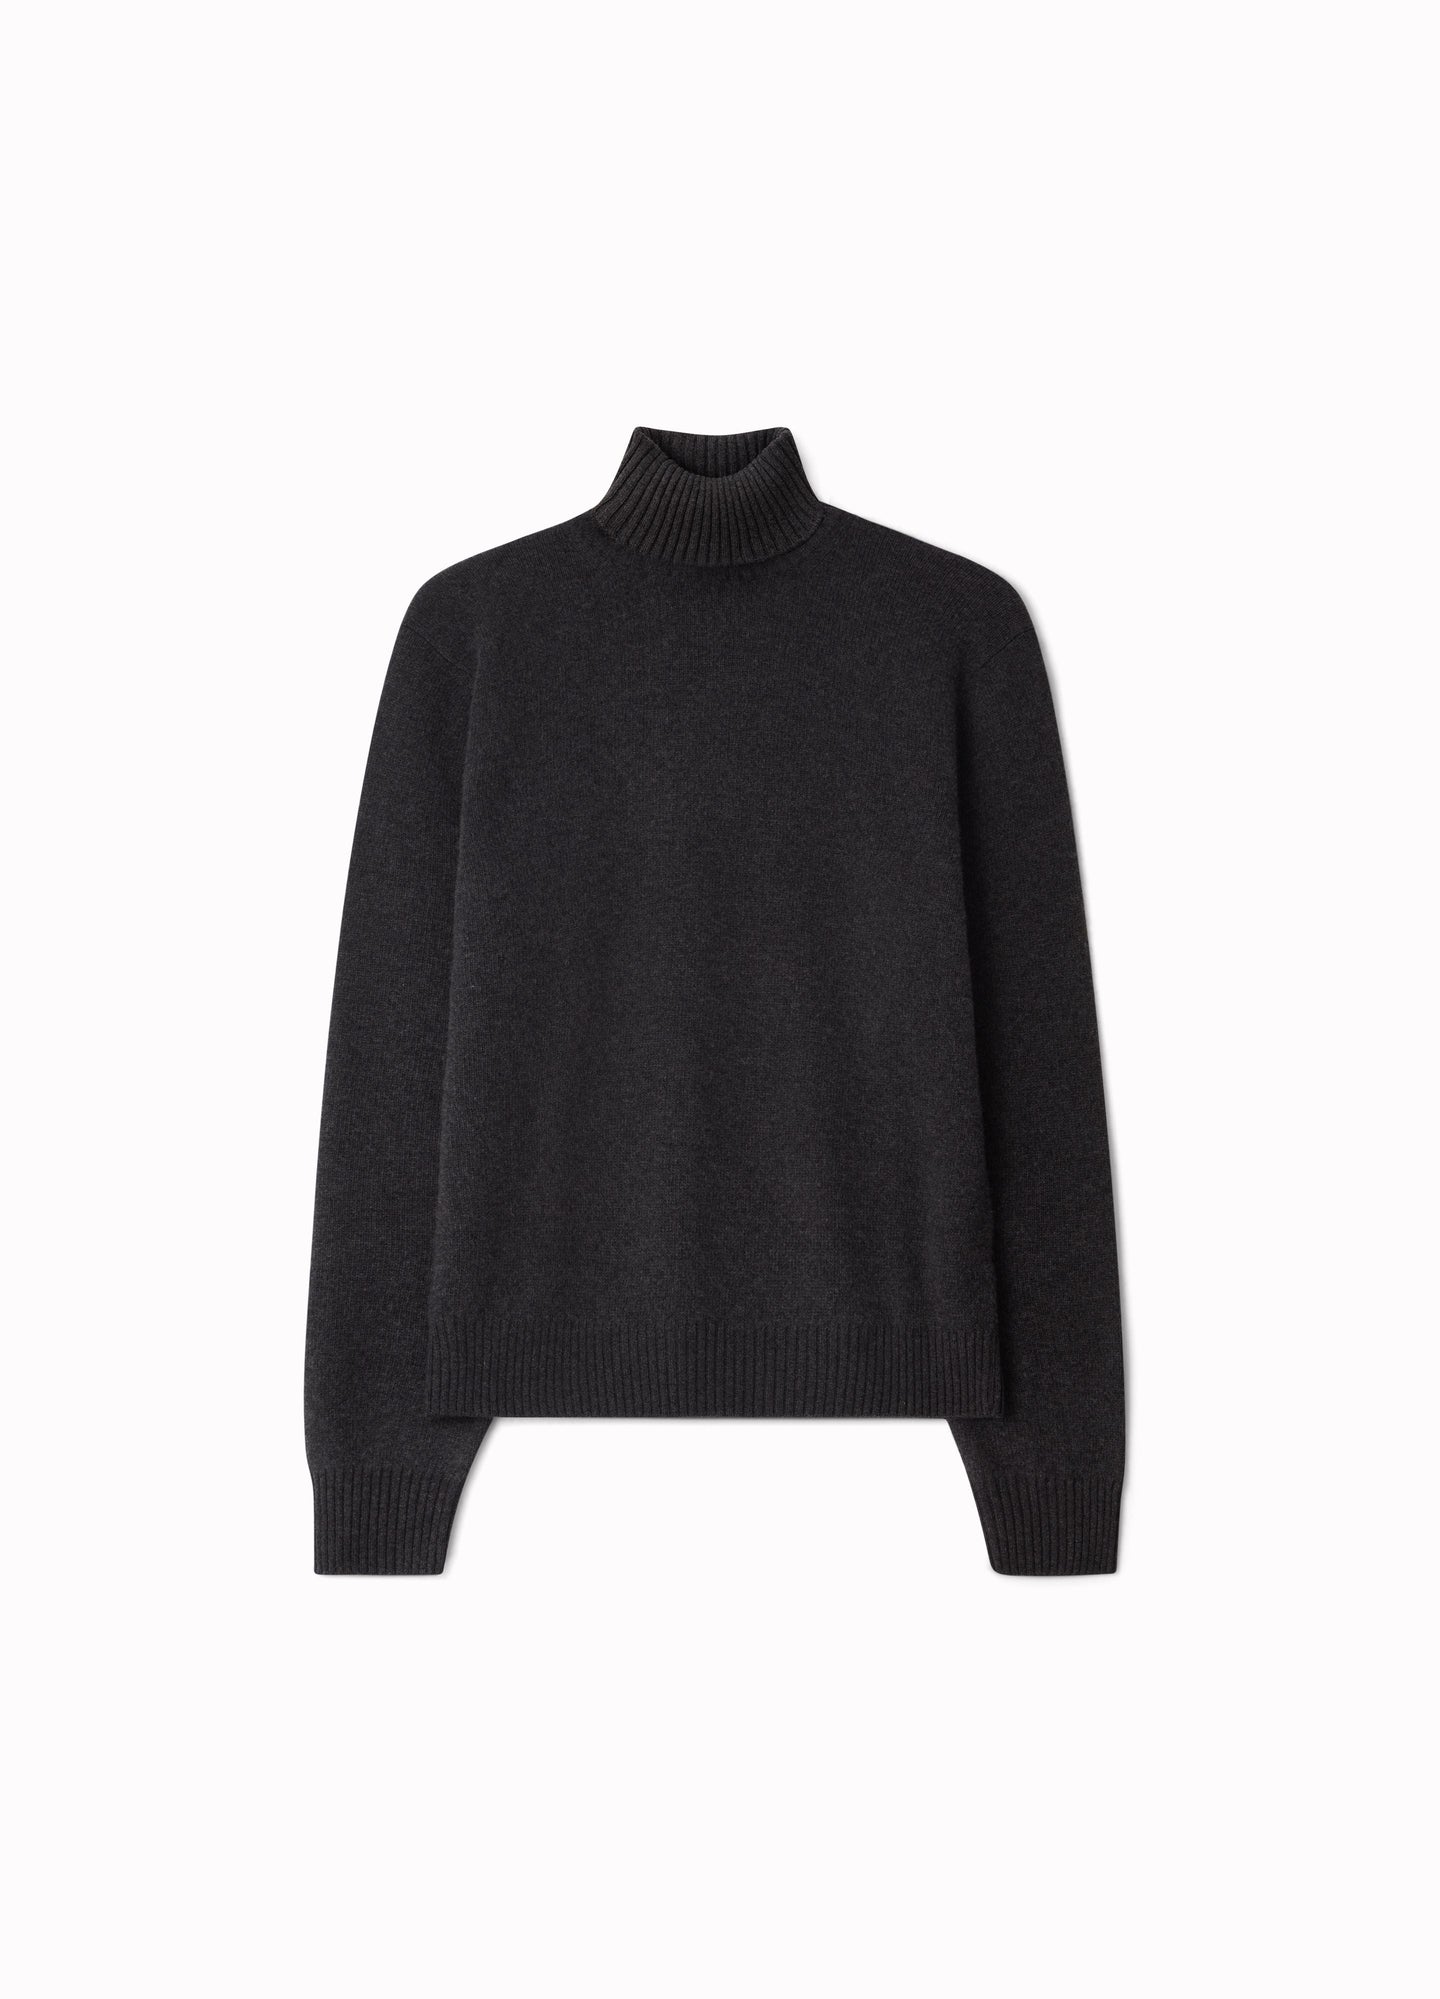 Benedict Rollneck Sweater - Charcoal bergbergstore